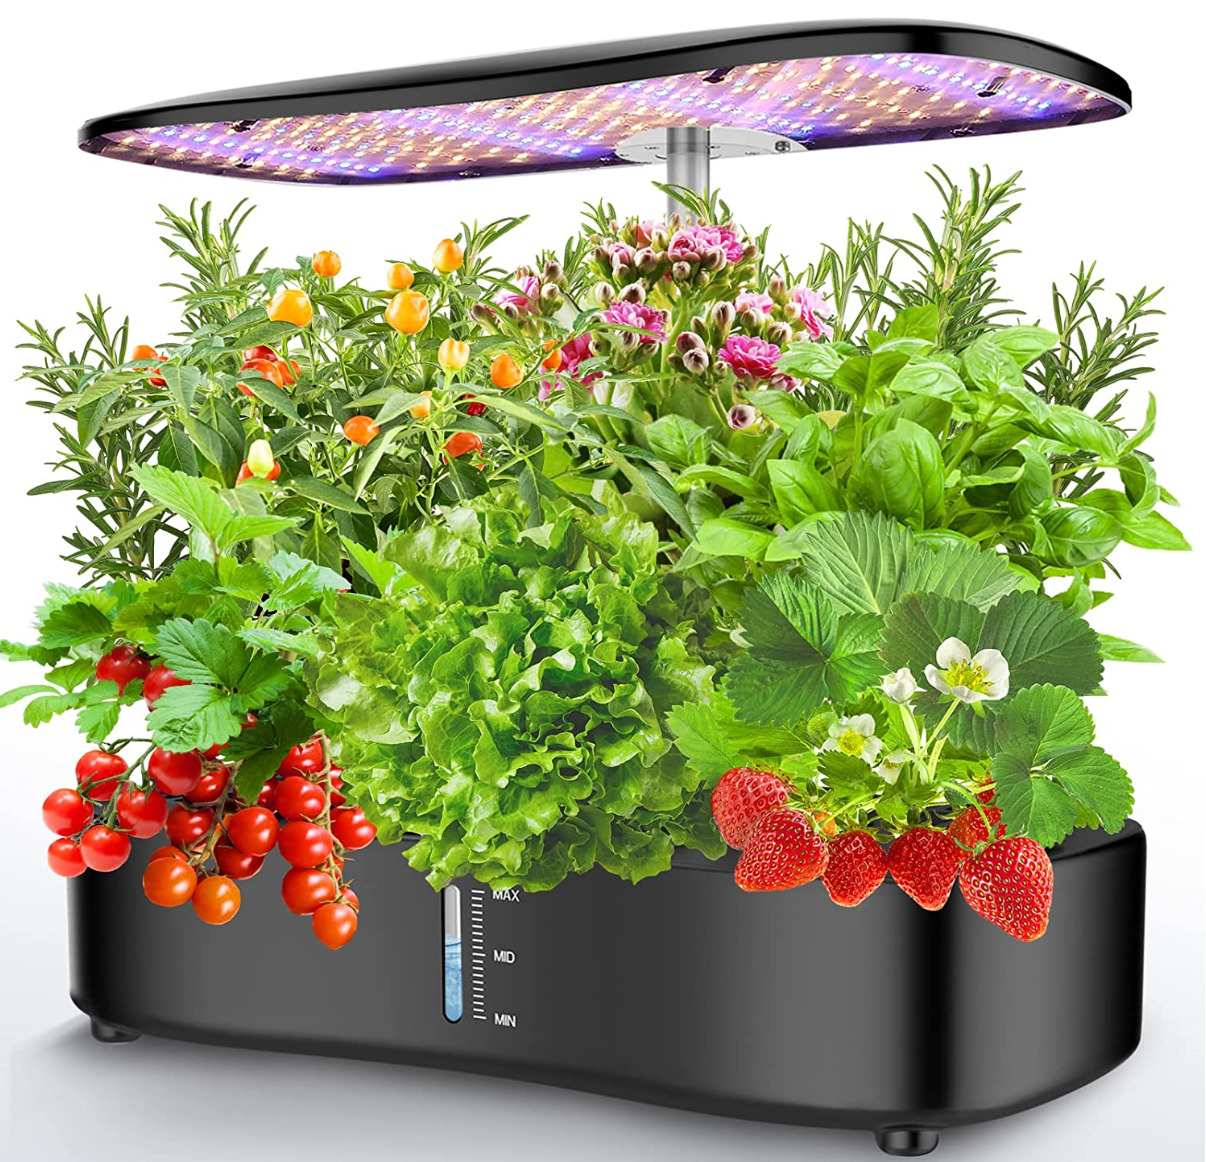 12 Pod Hydroponics Indoor Growing System Grow Light Full Spectrum Plants Bloom